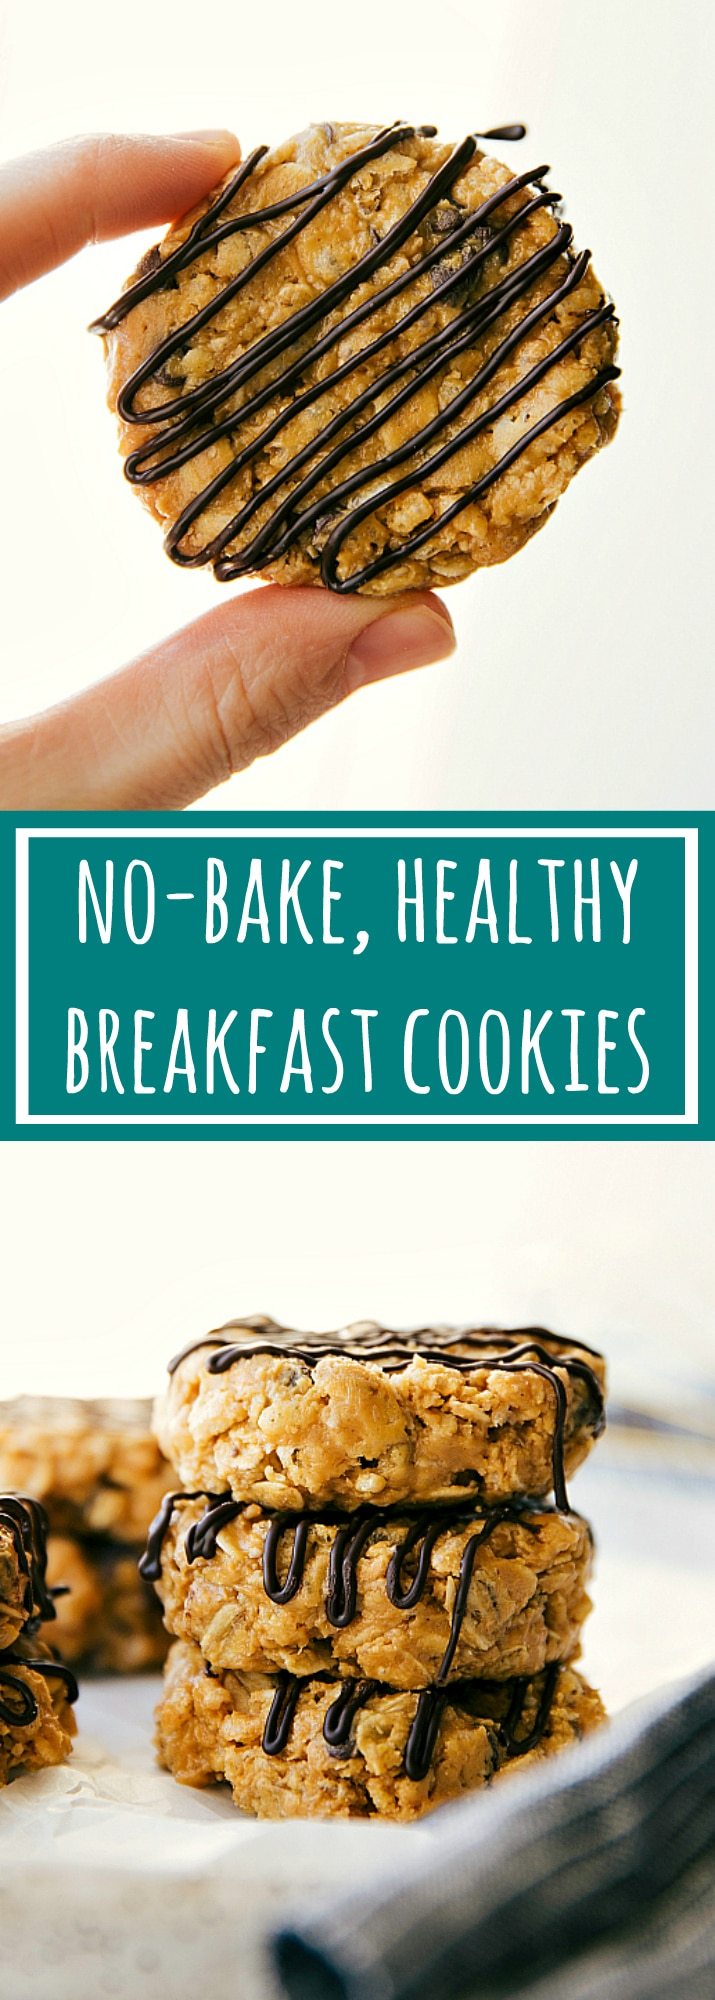 No bake, healthy, and easy breakfast cookies